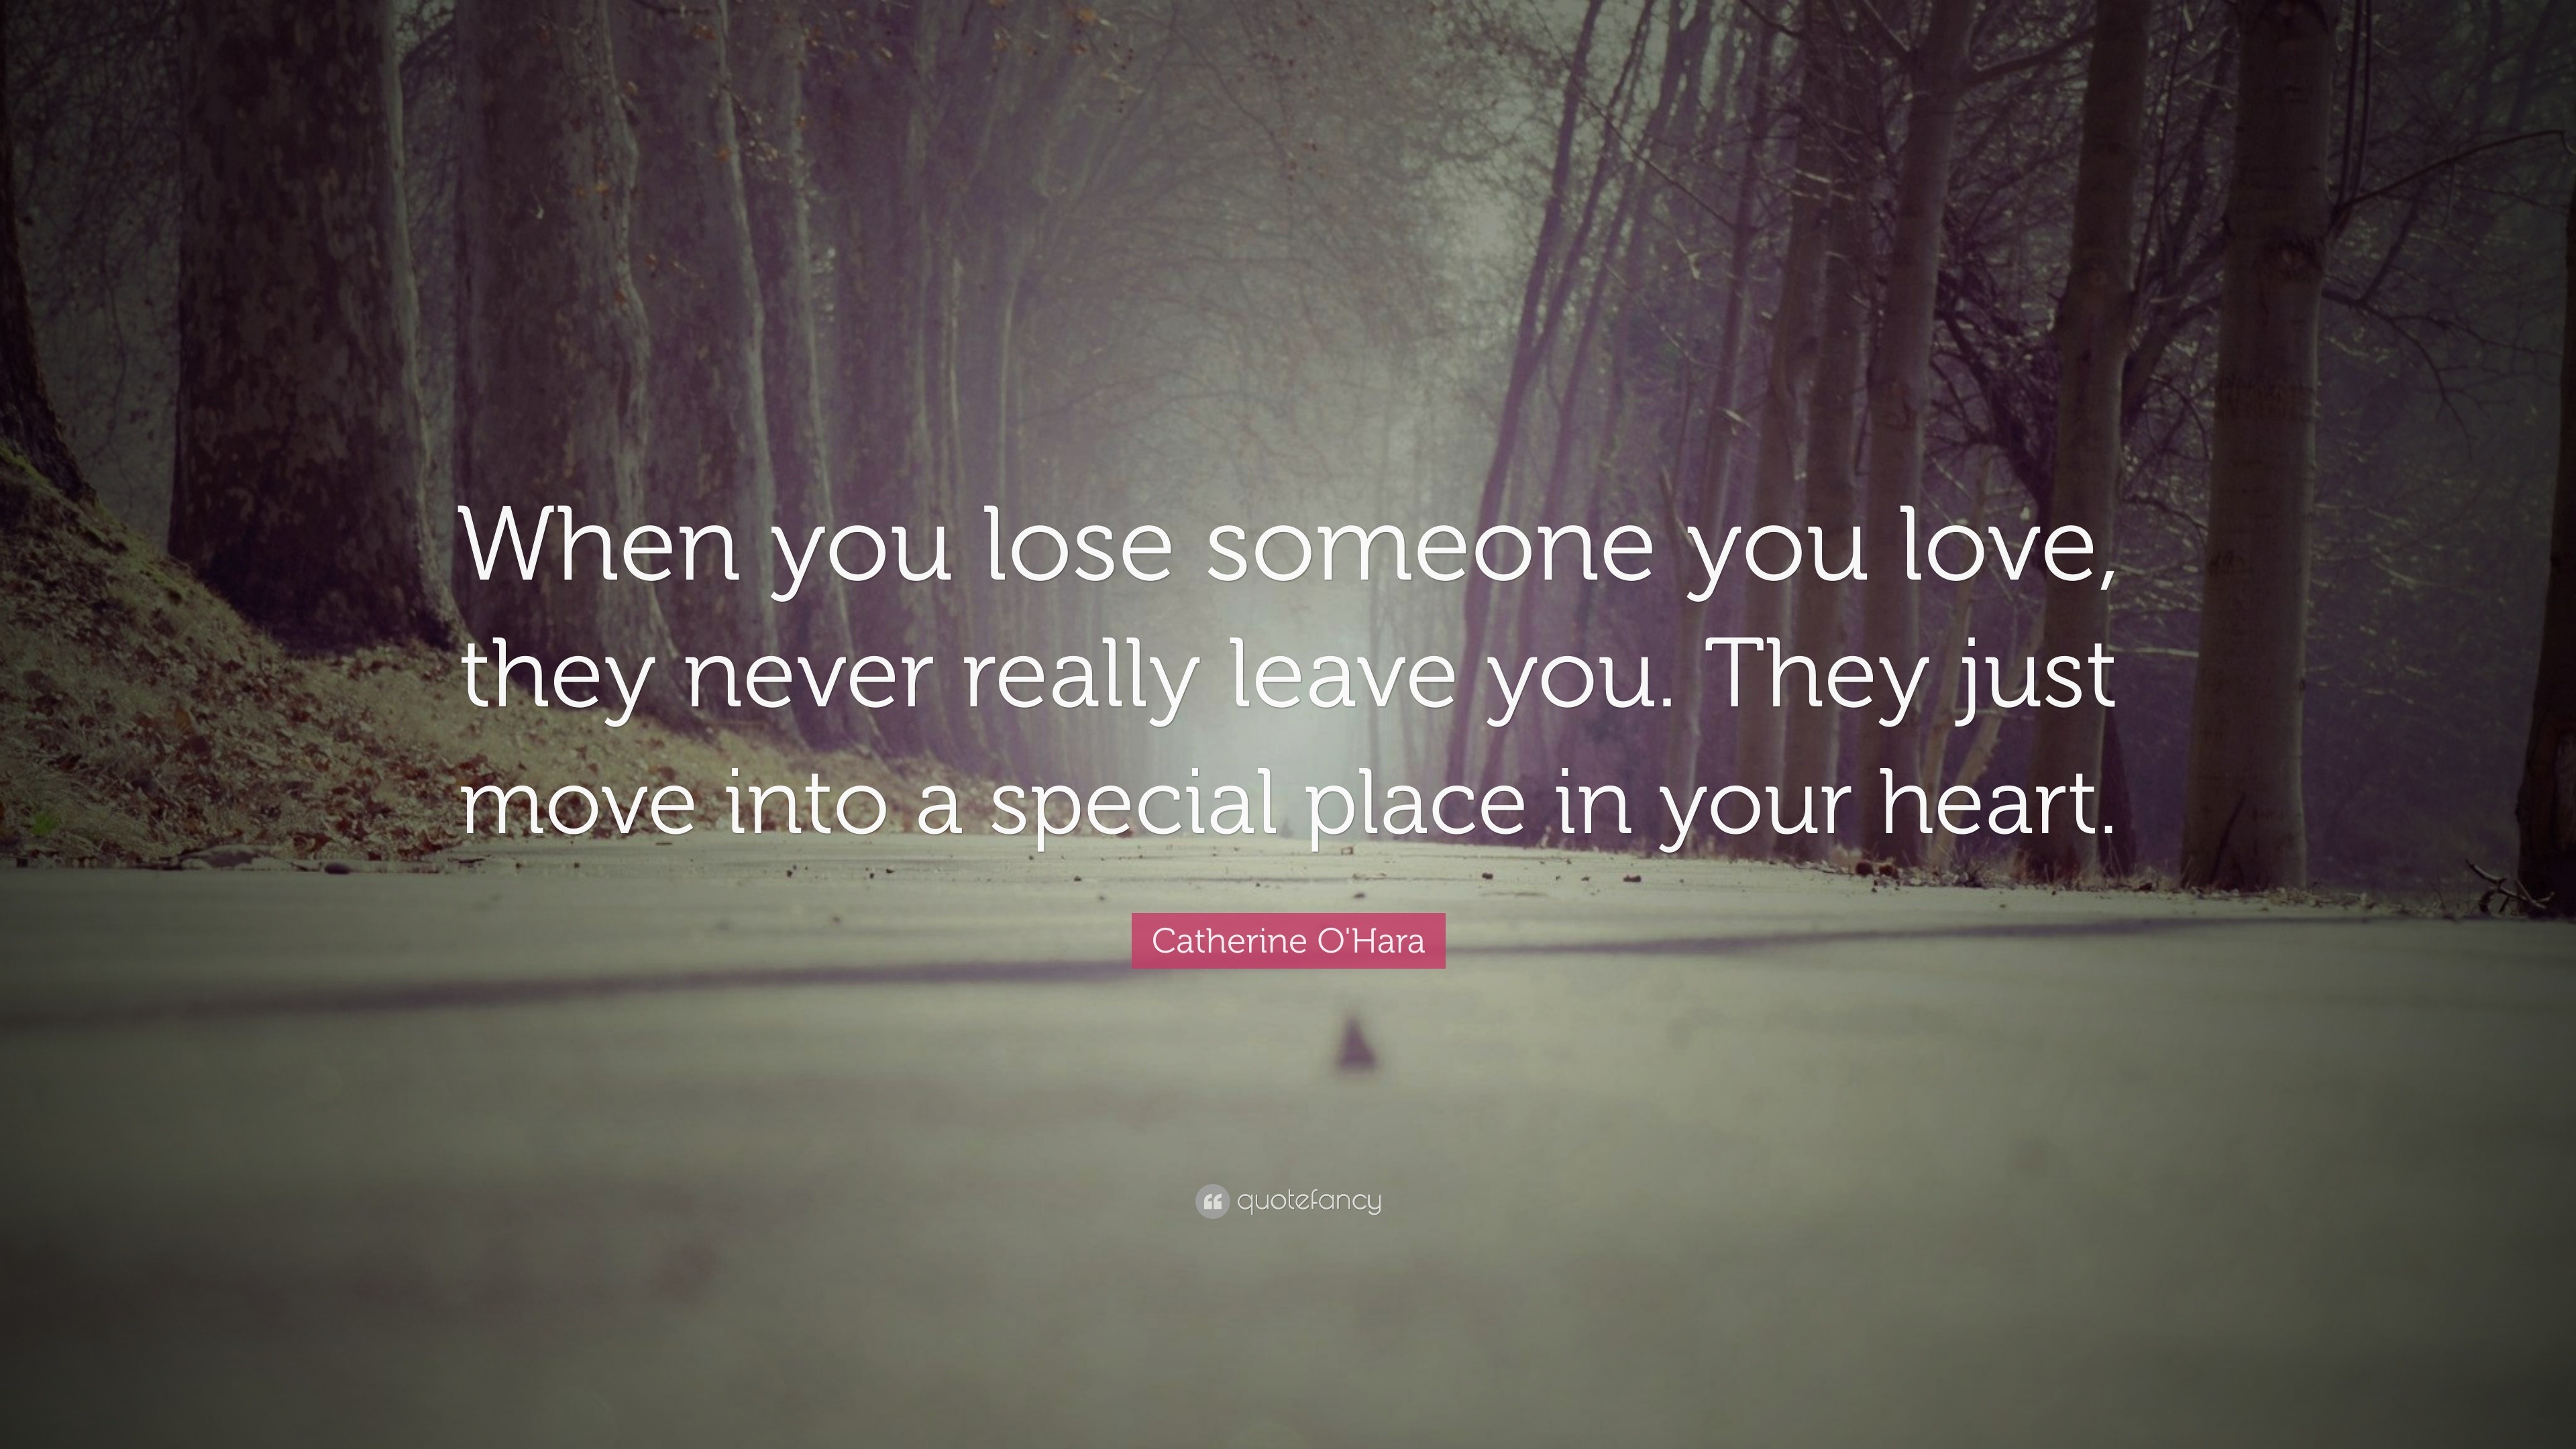 lose-lose relationship